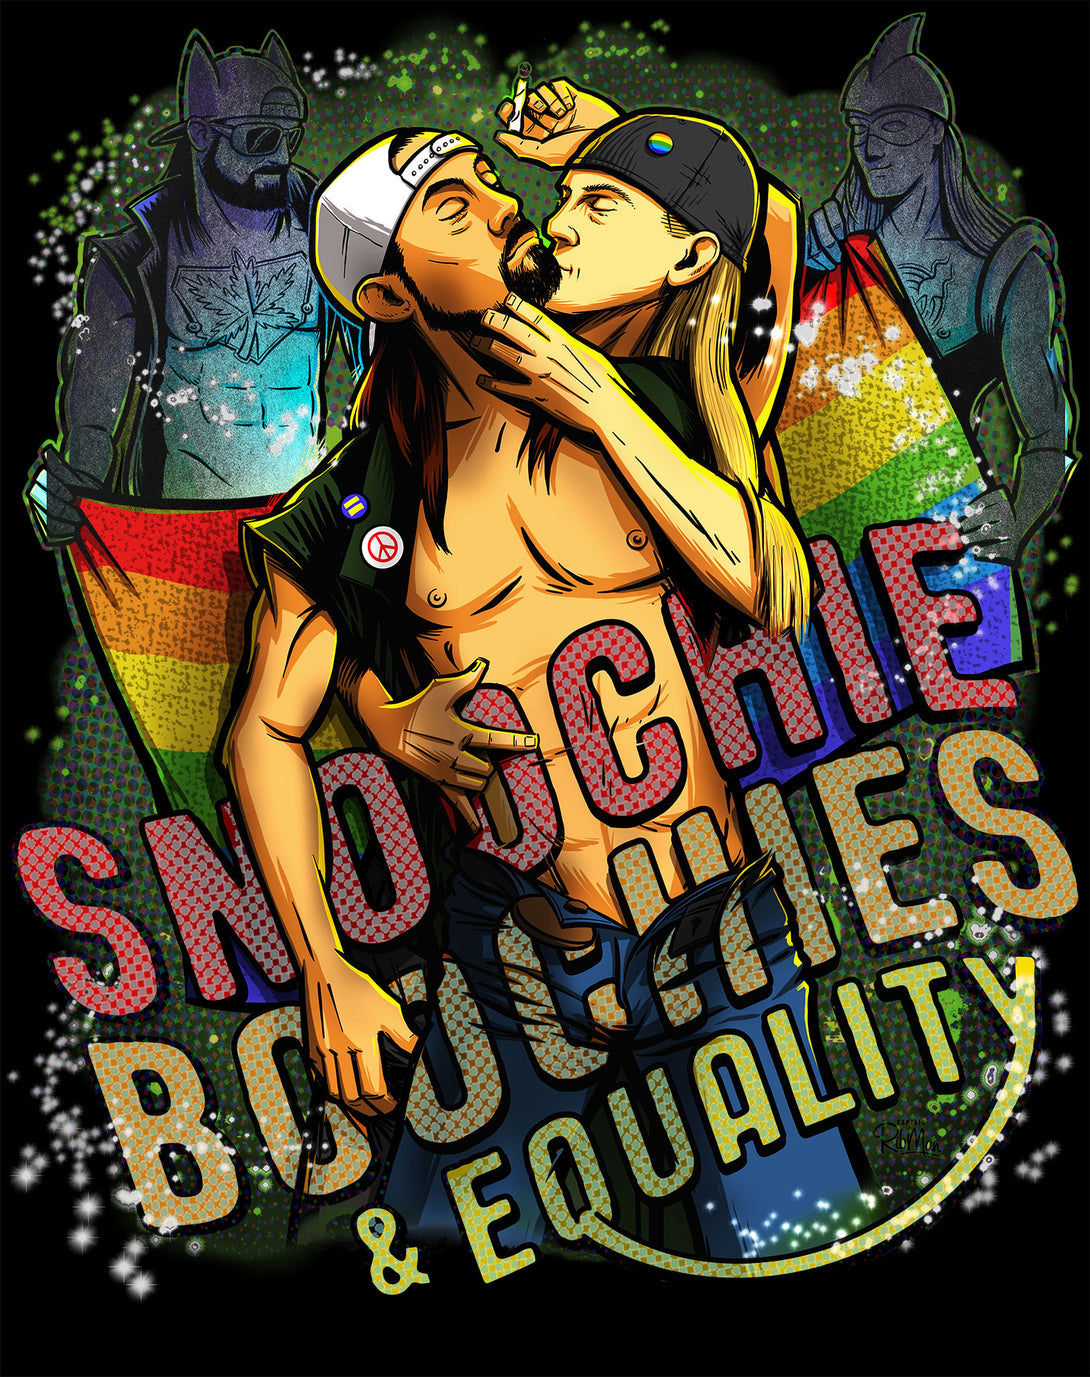 Kevin Smith Jay & Silent Bob Reboot LGBTQ Splash LDN Edition Official Men's T-Shirt Black - Urban Species Design Close Up